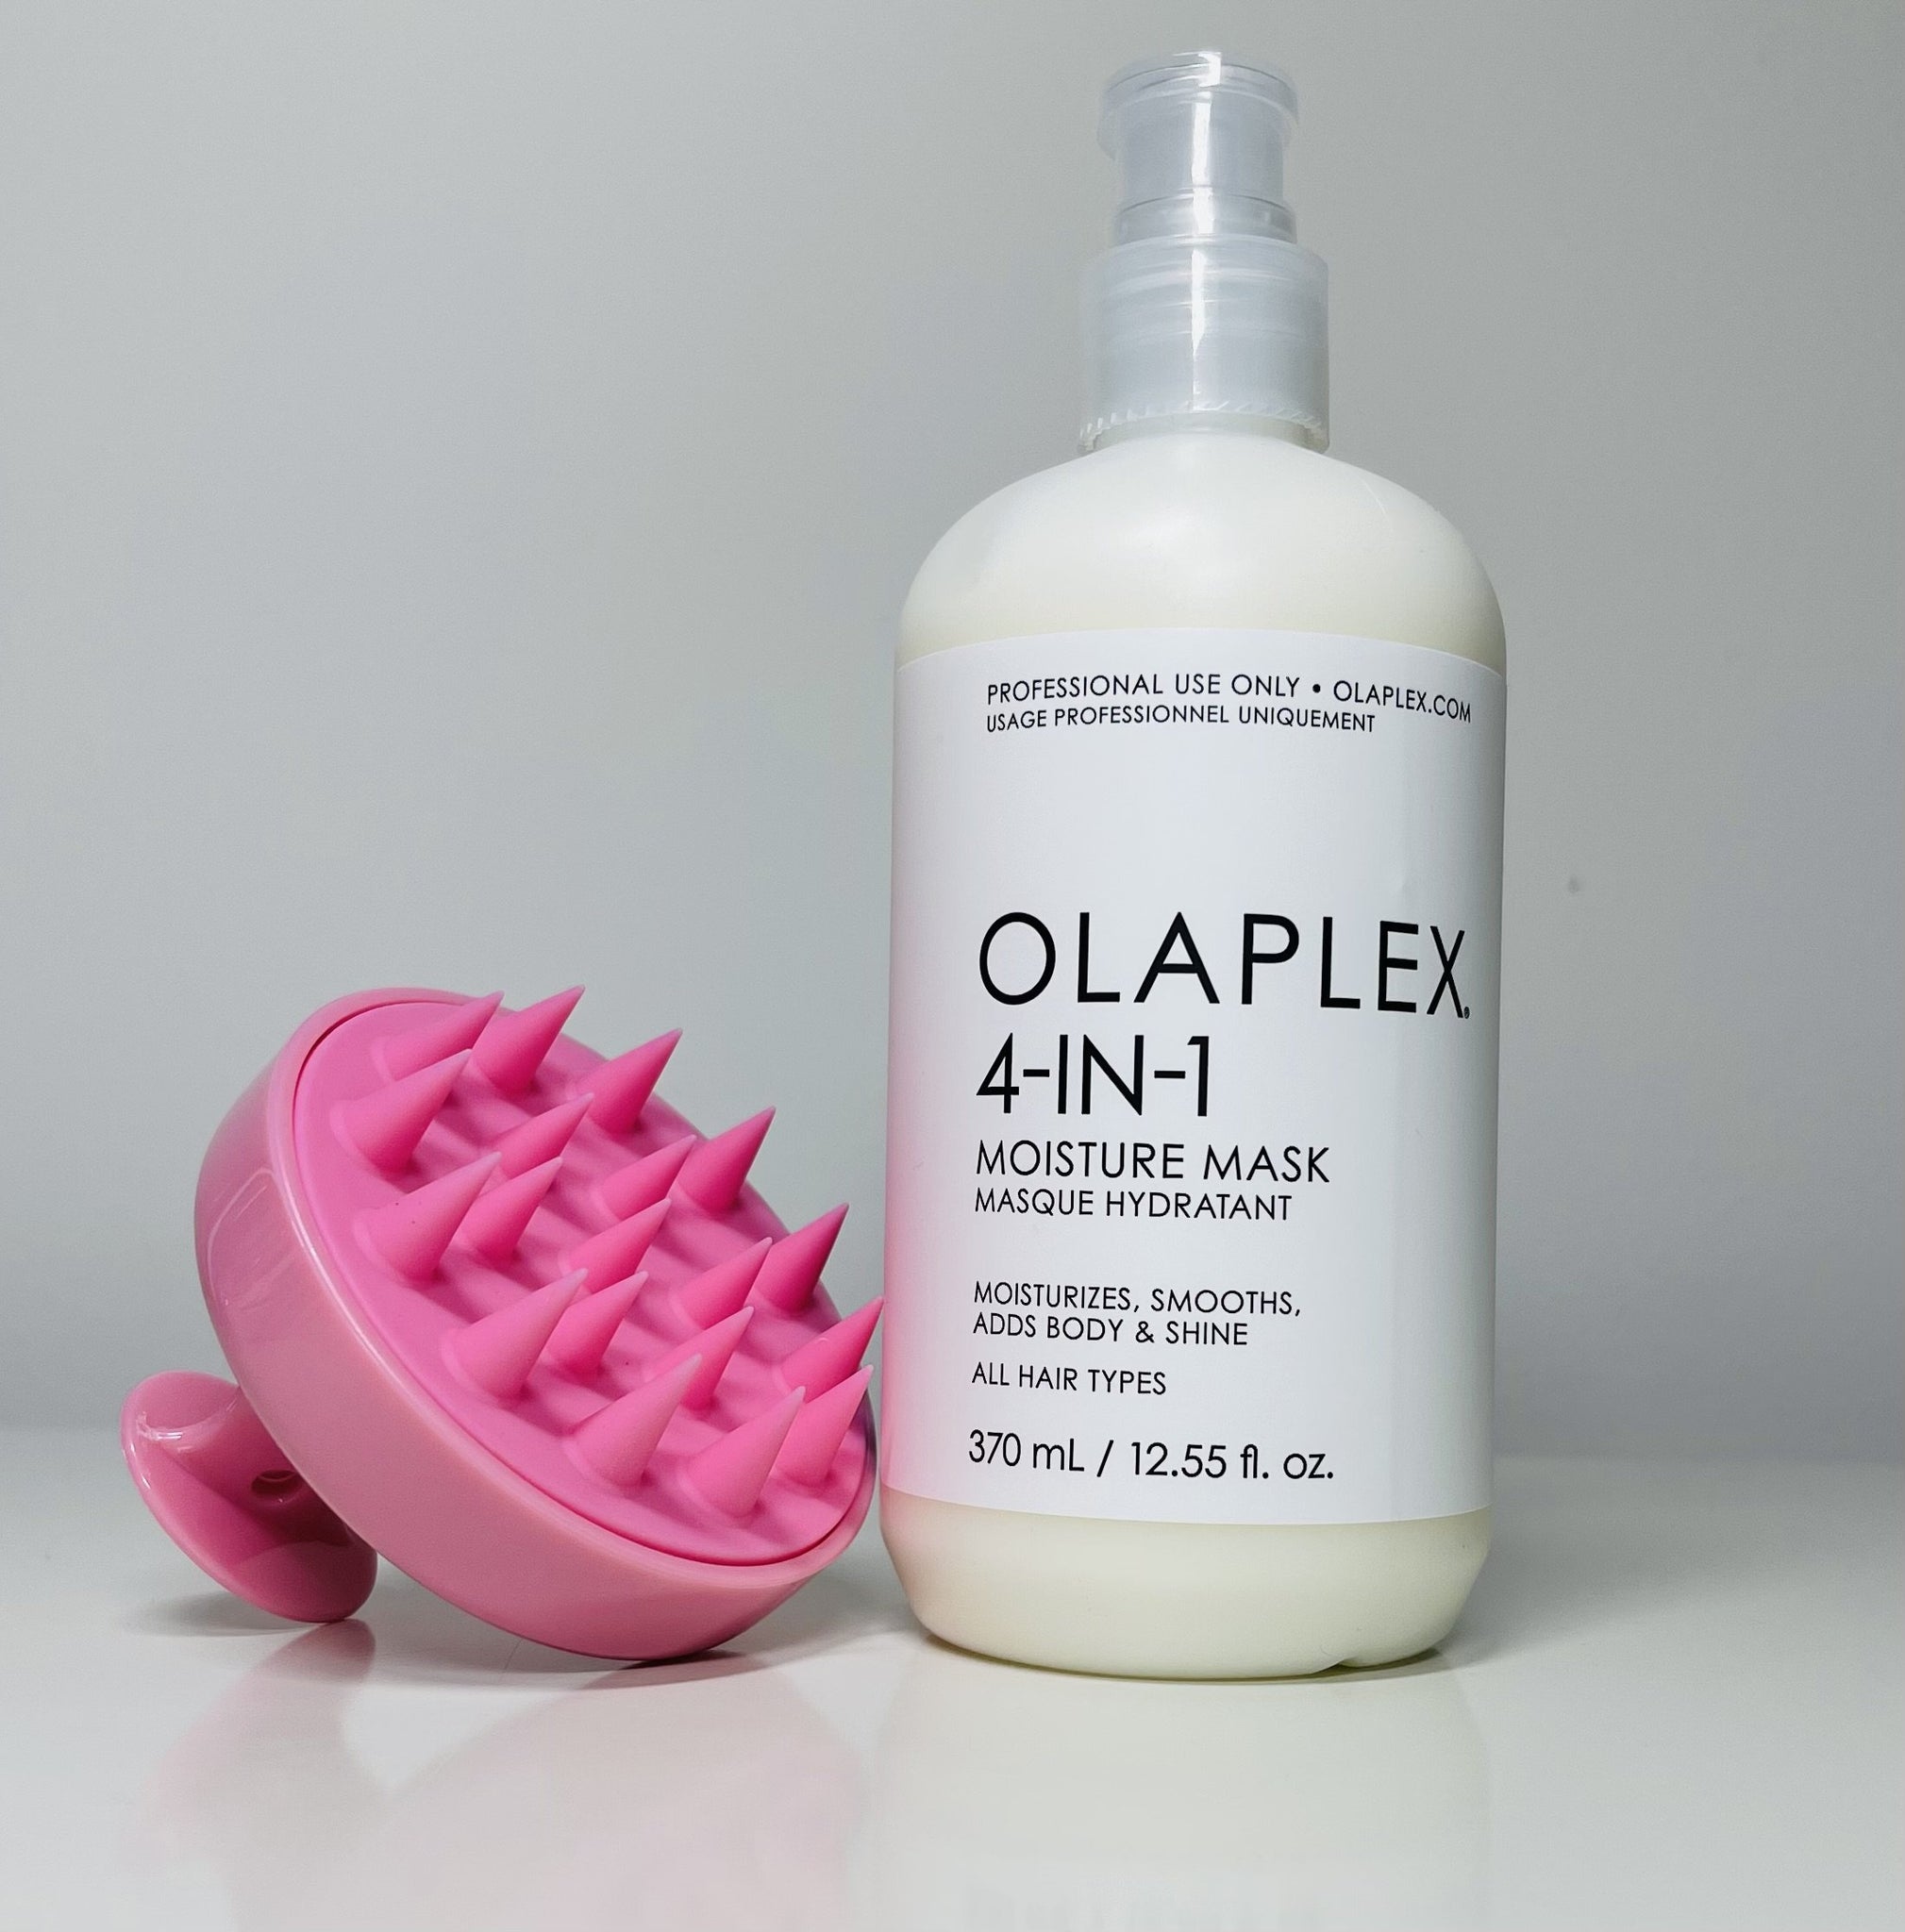 Olaplex's 4-In-1 Moisture Mask Gave Me The Softest Hair Ever